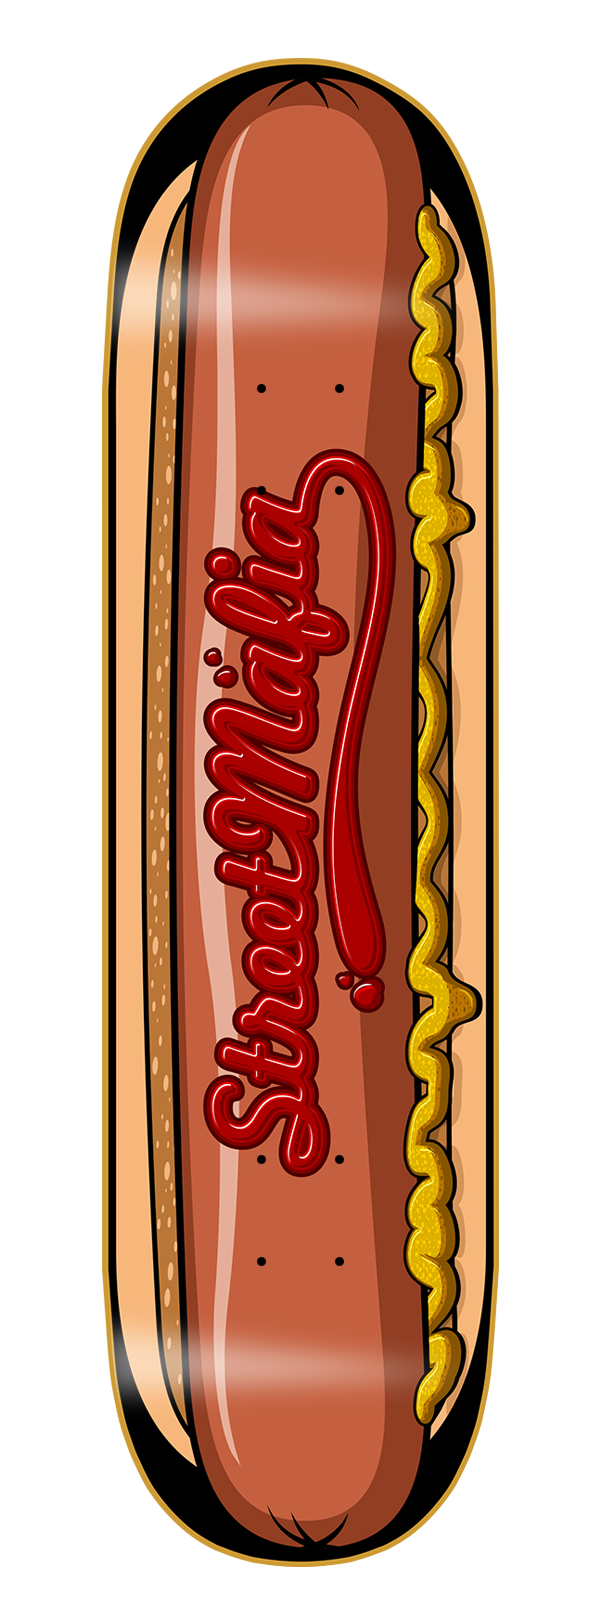 Food skateboard, street mafia skateboard with a hotdog